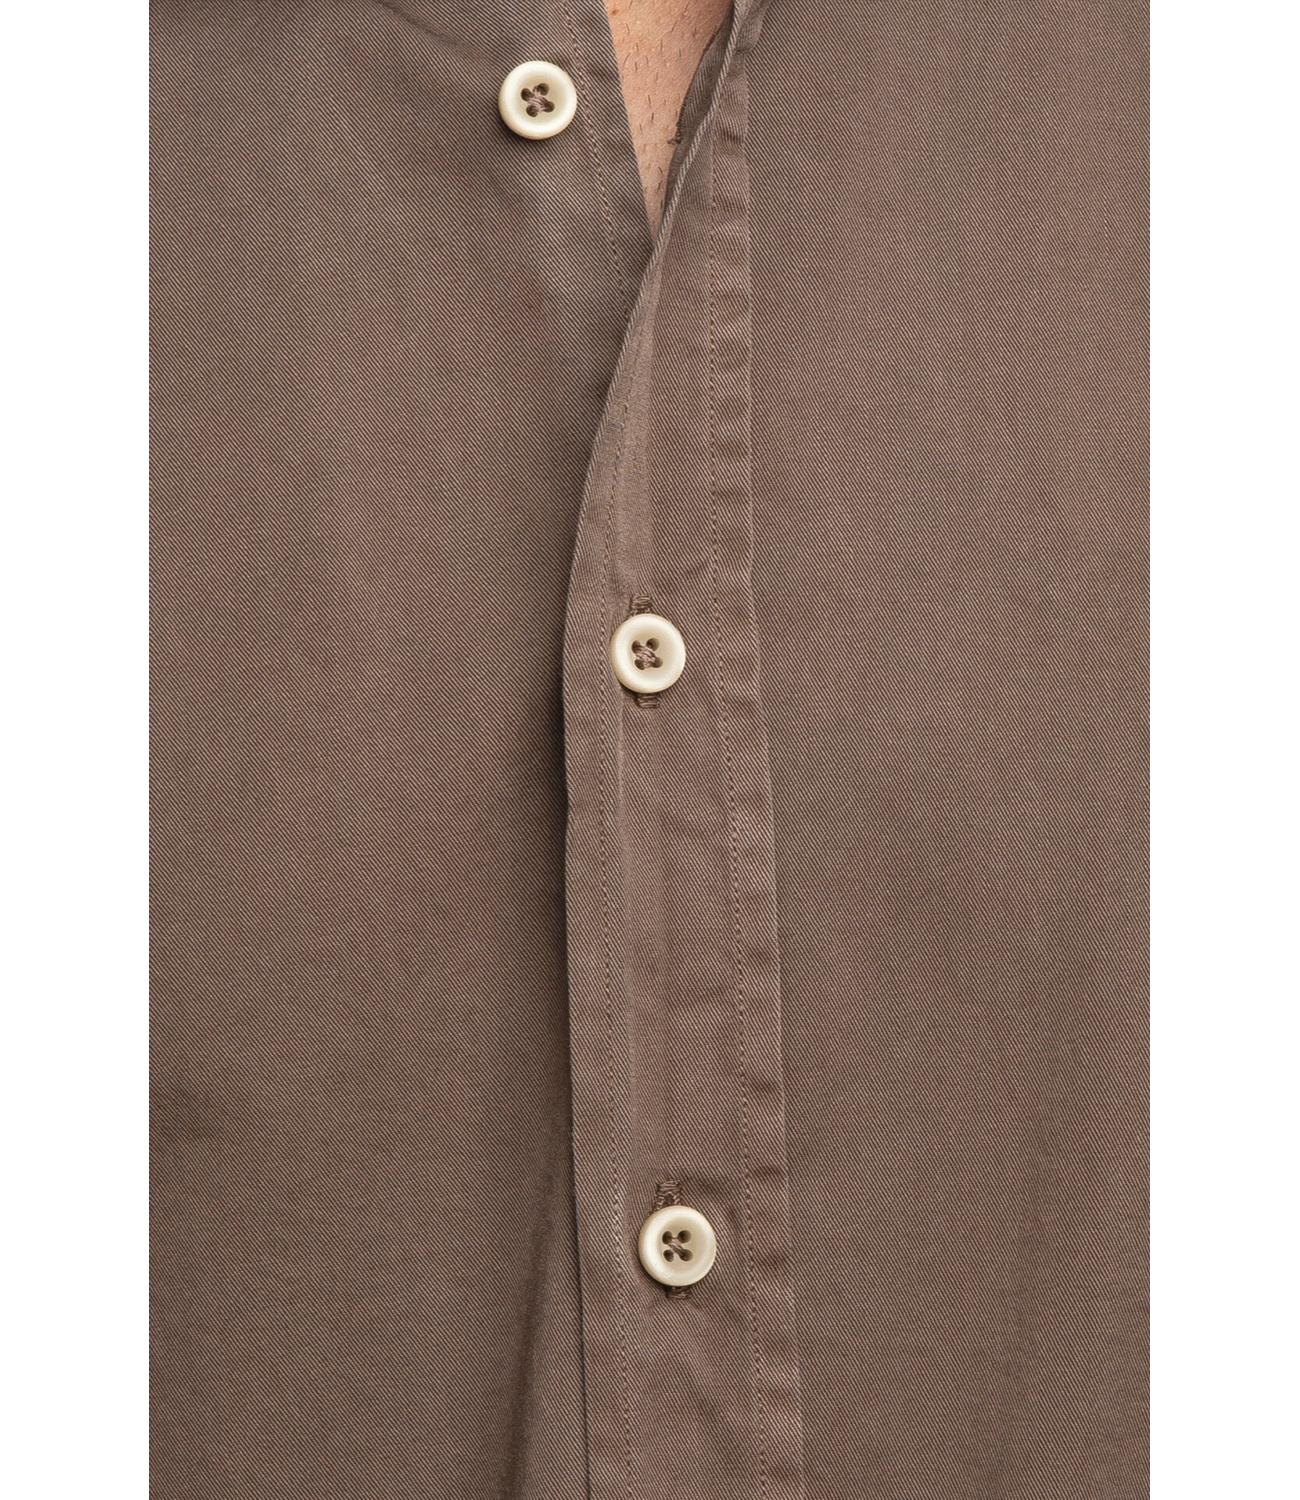 Simo 1379 men's stick shirt in dove grey